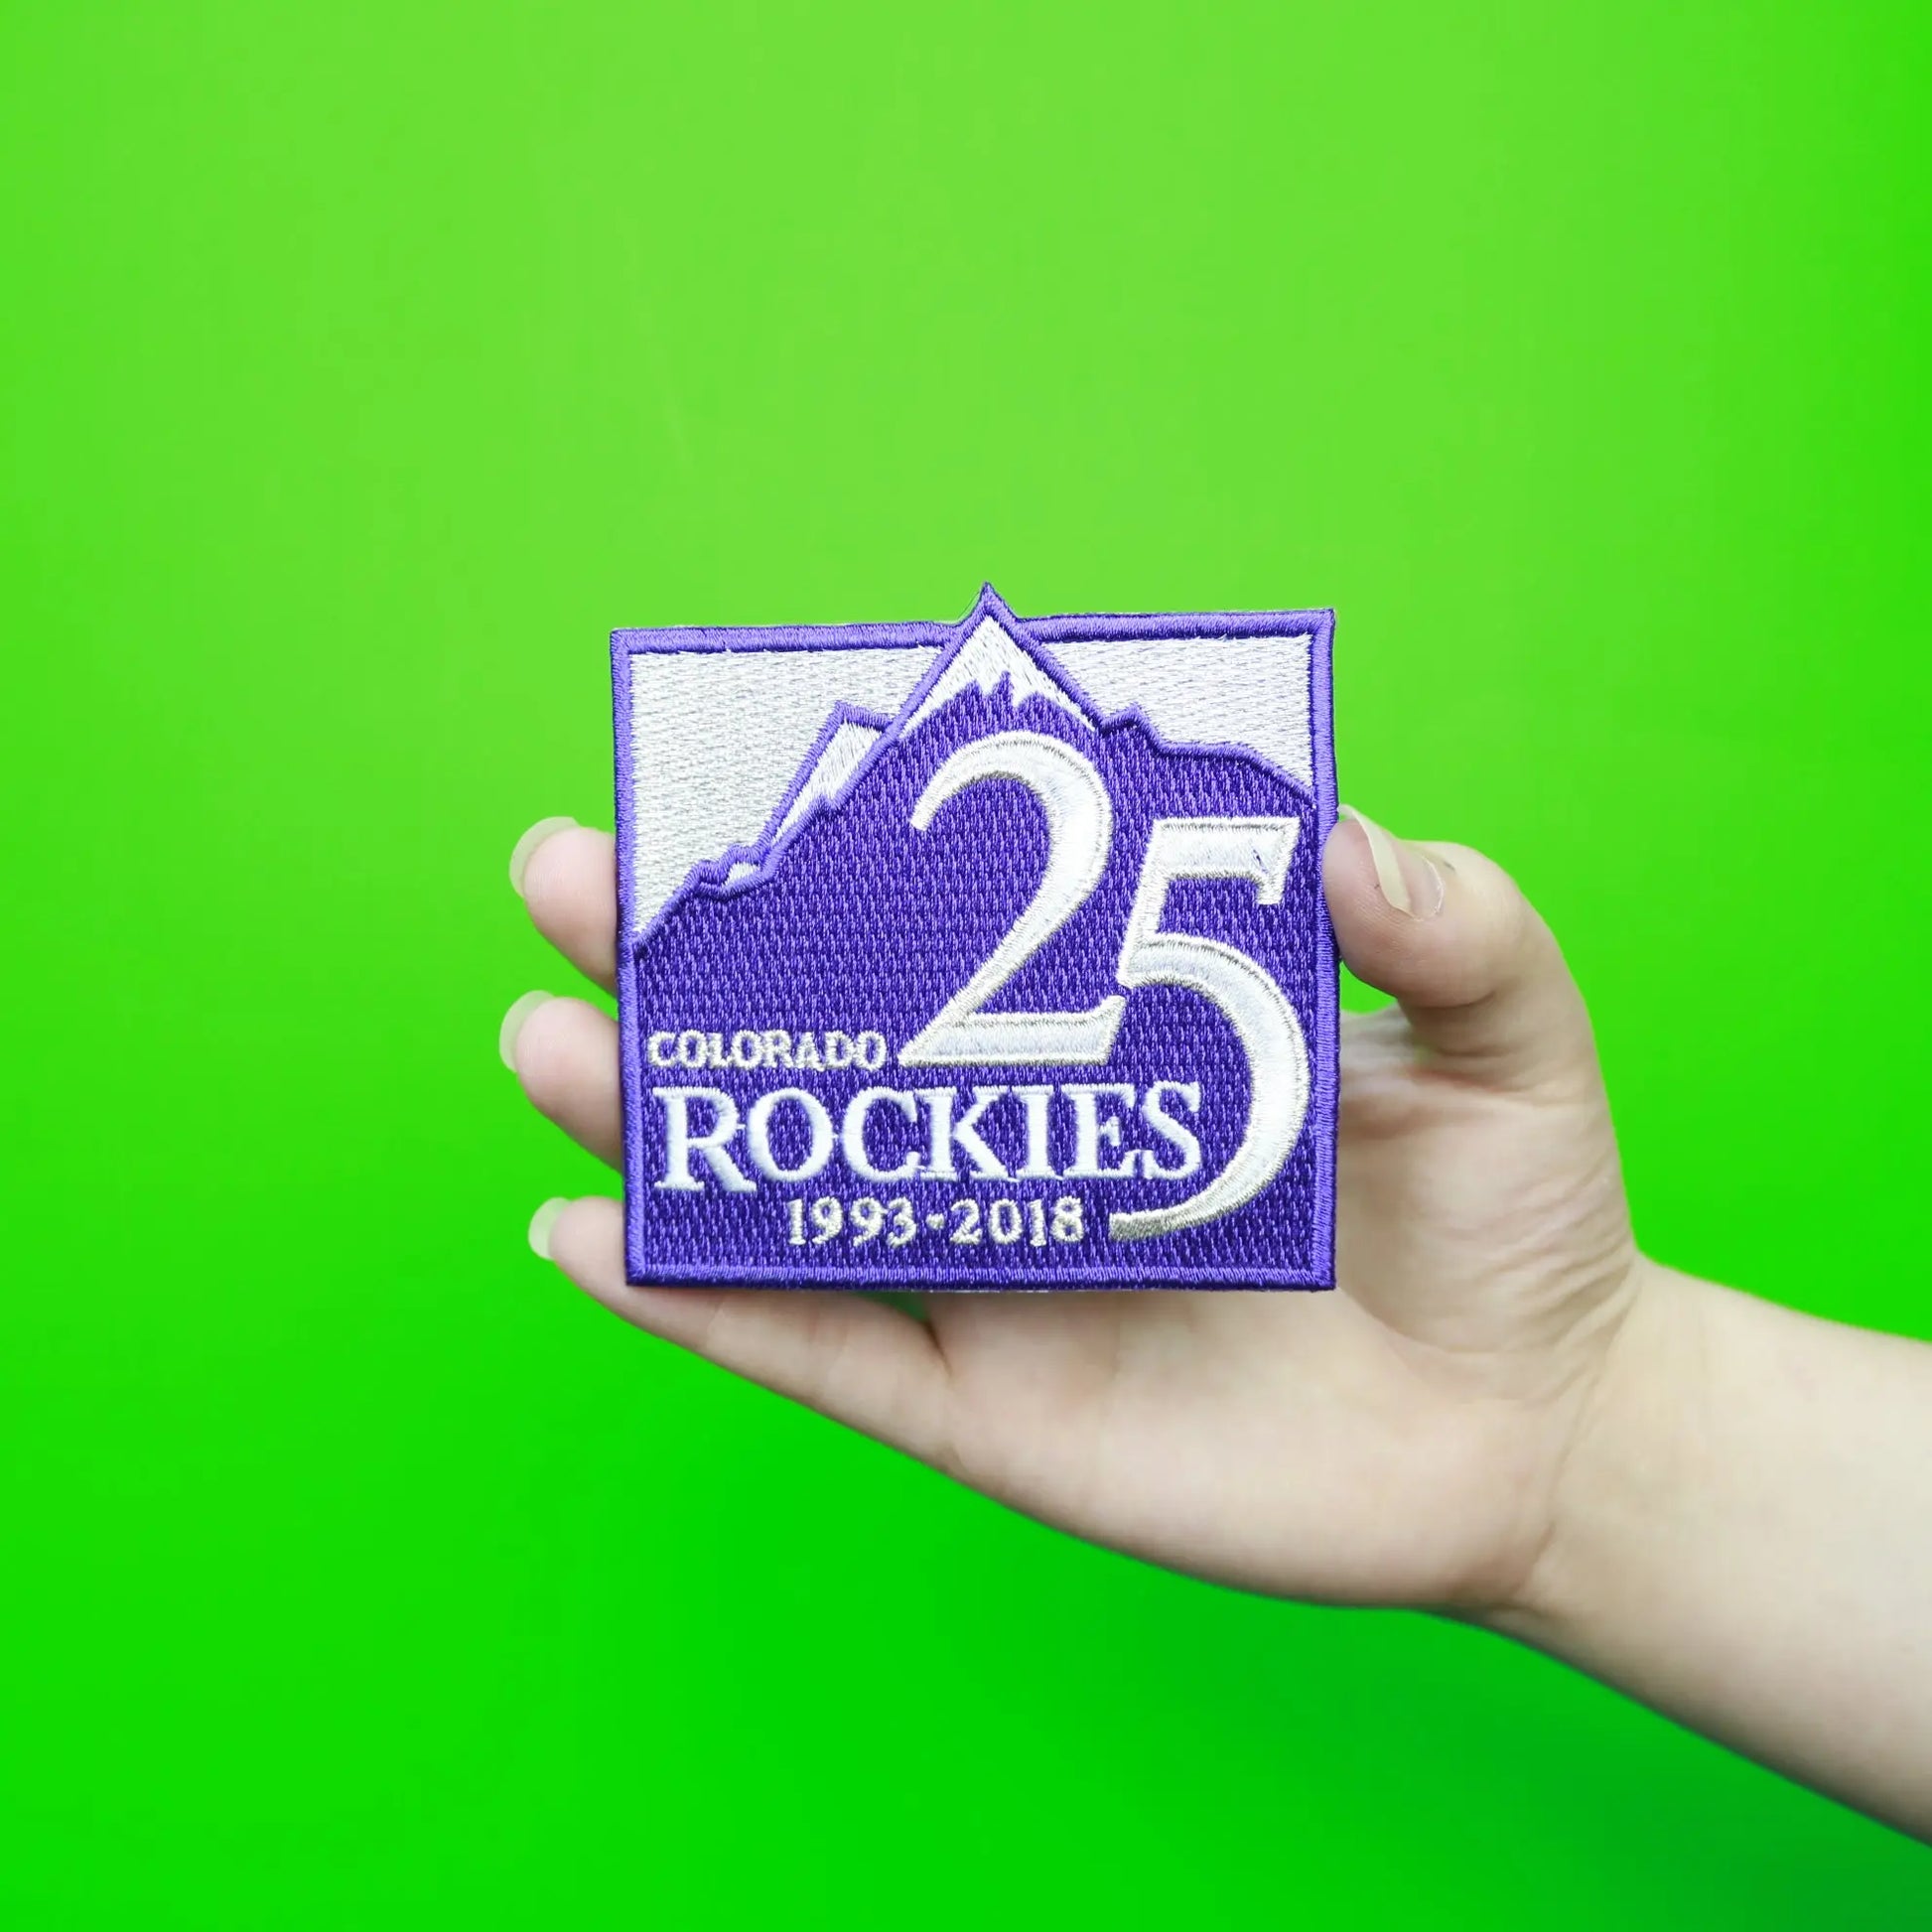 2018 1993 Colorado Rockies 25th Anniversary Logo Sleeve Patch 